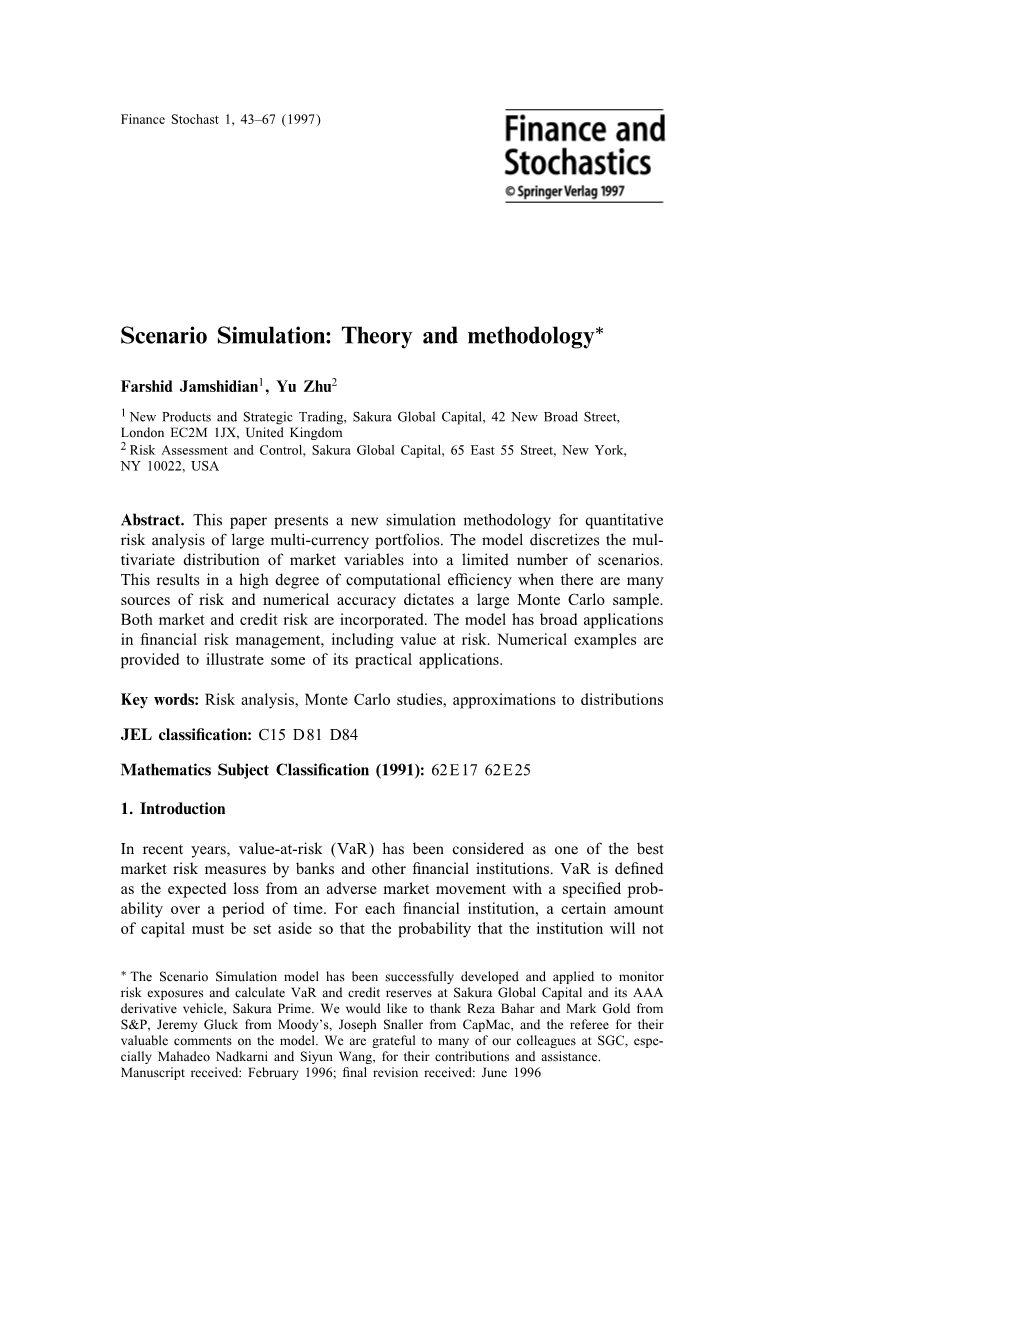 Scenario Simulation: Theory and Methodology∗